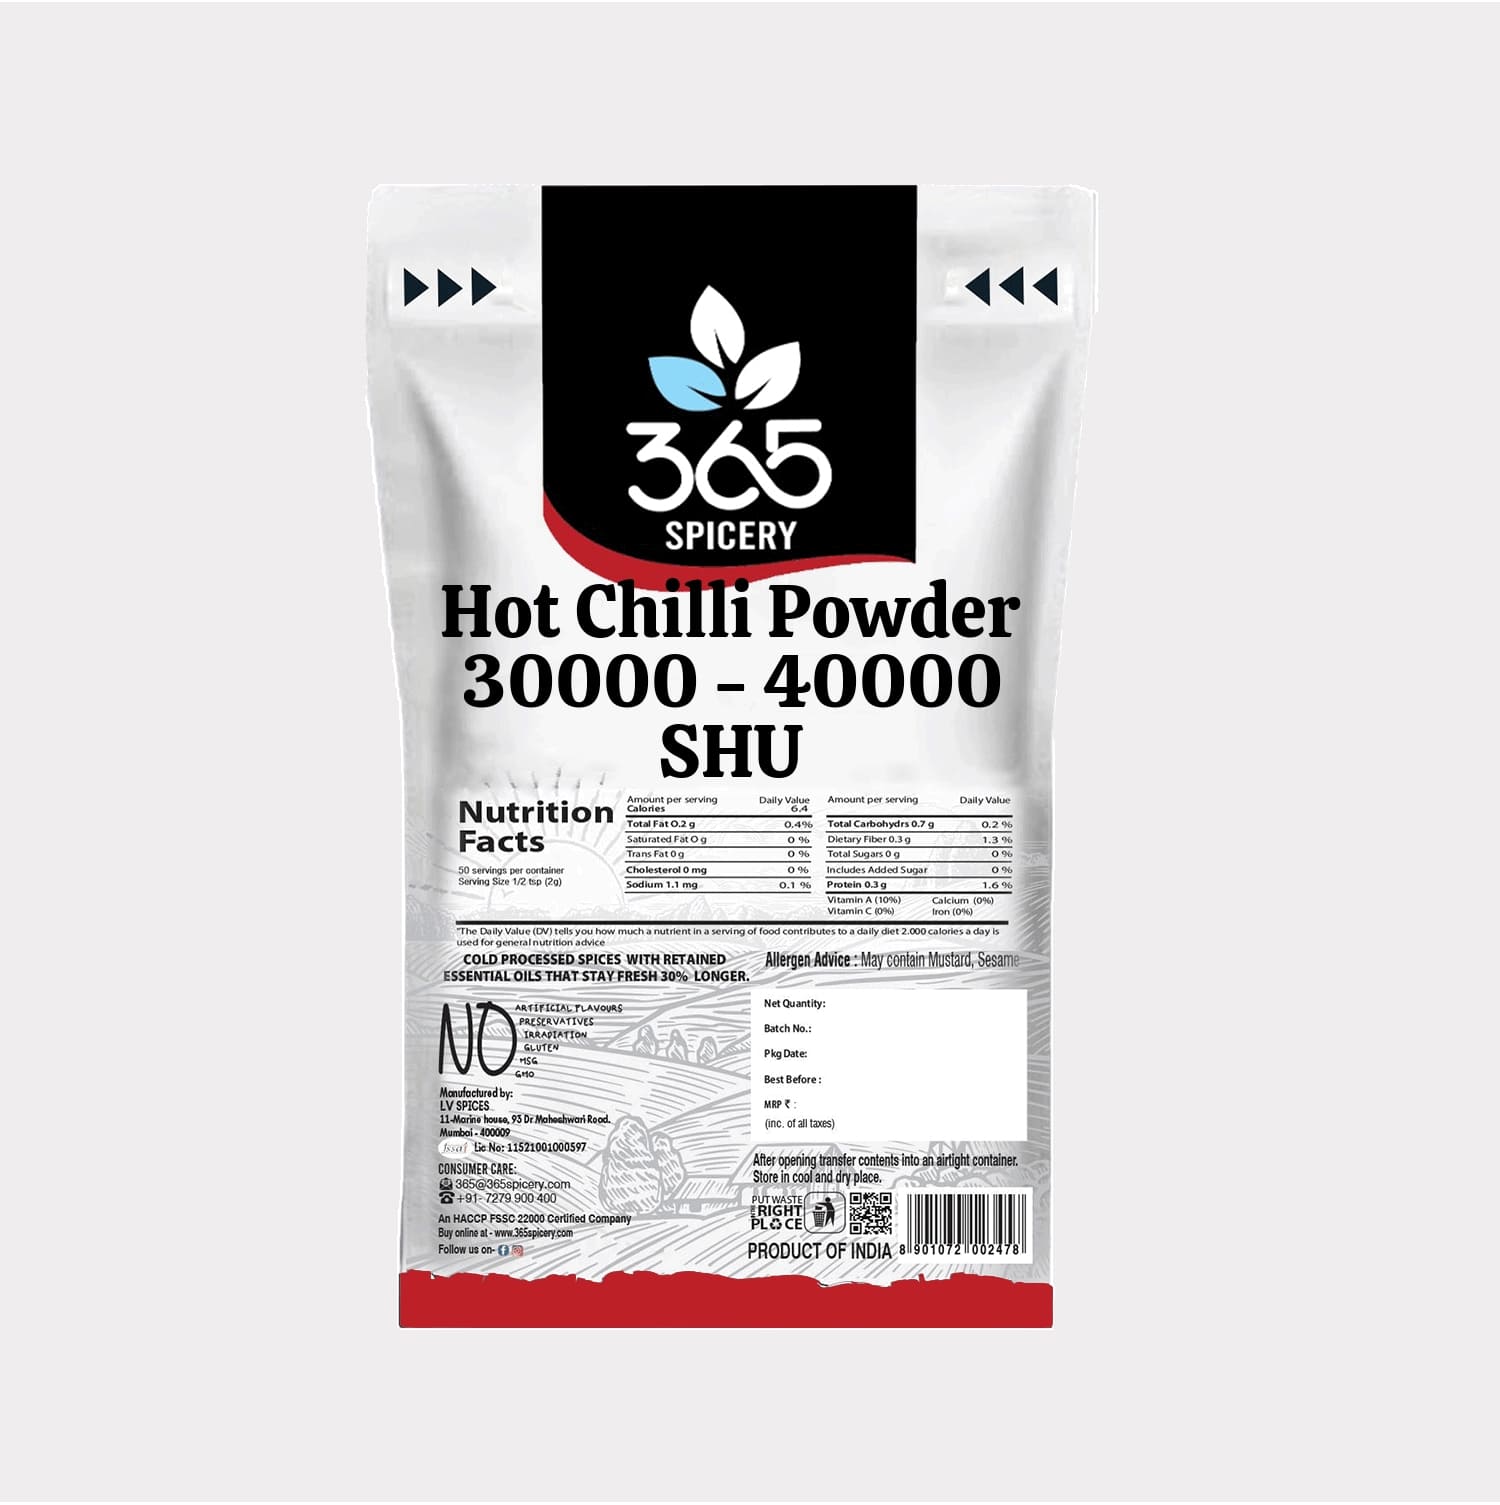 Hot Chilli Powder 30000 - 40000 SHU